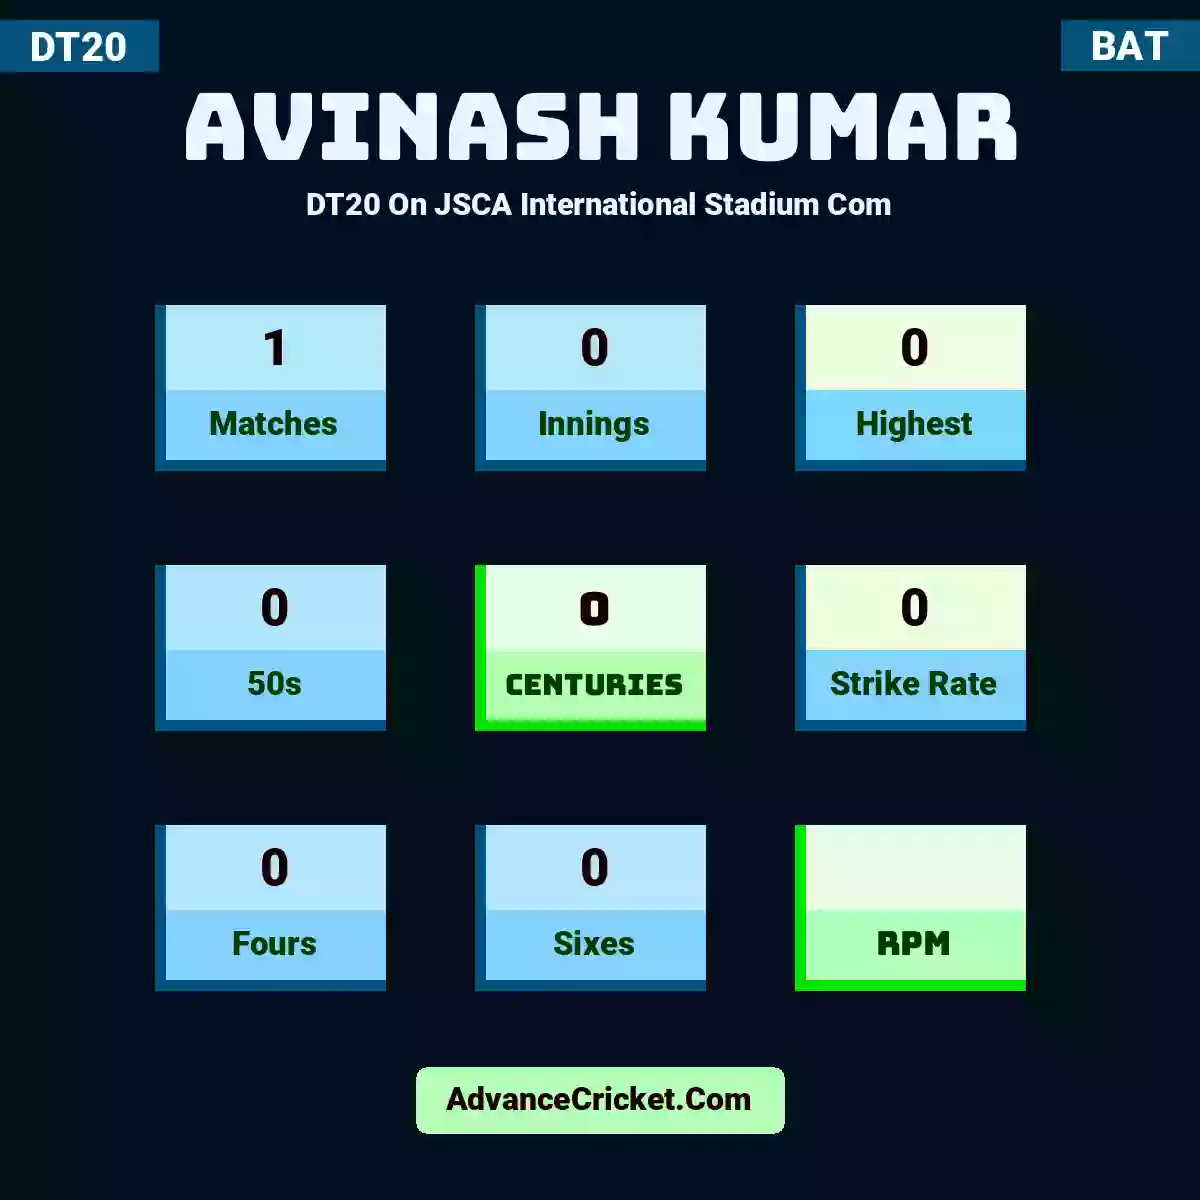 Avinash Kumar DT20  On JSCA International Stadium Com, Avinash Kumar played 1 matches, scored 0 runs as highest, 0 half-centuries, and 0 centuries, with a strike rate of 0. A.Kumar hit 0 fours and 0 sixes.